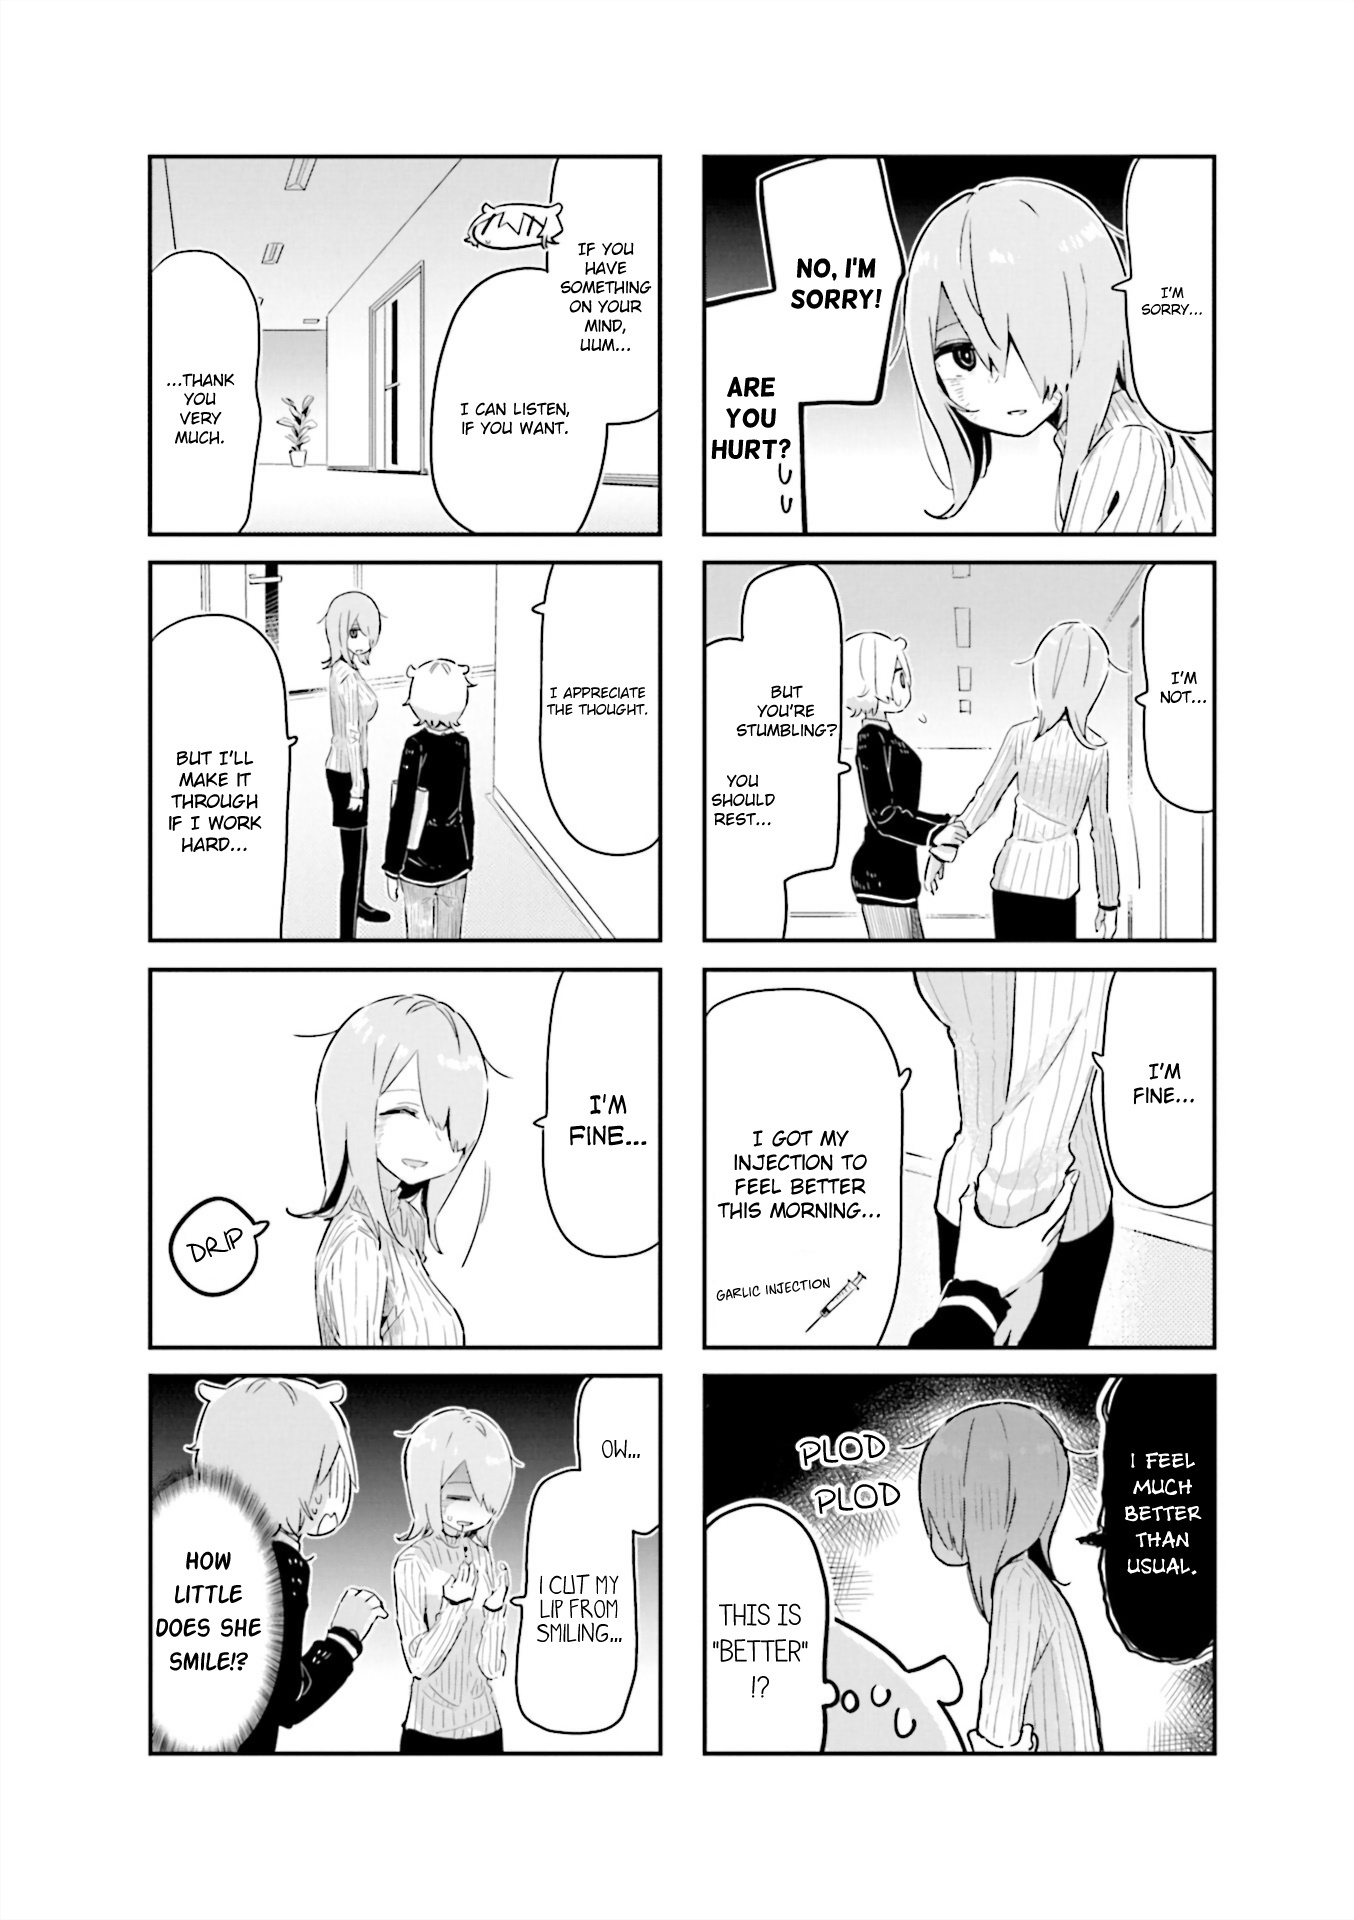 Hogushite, Yui-San - Page 2